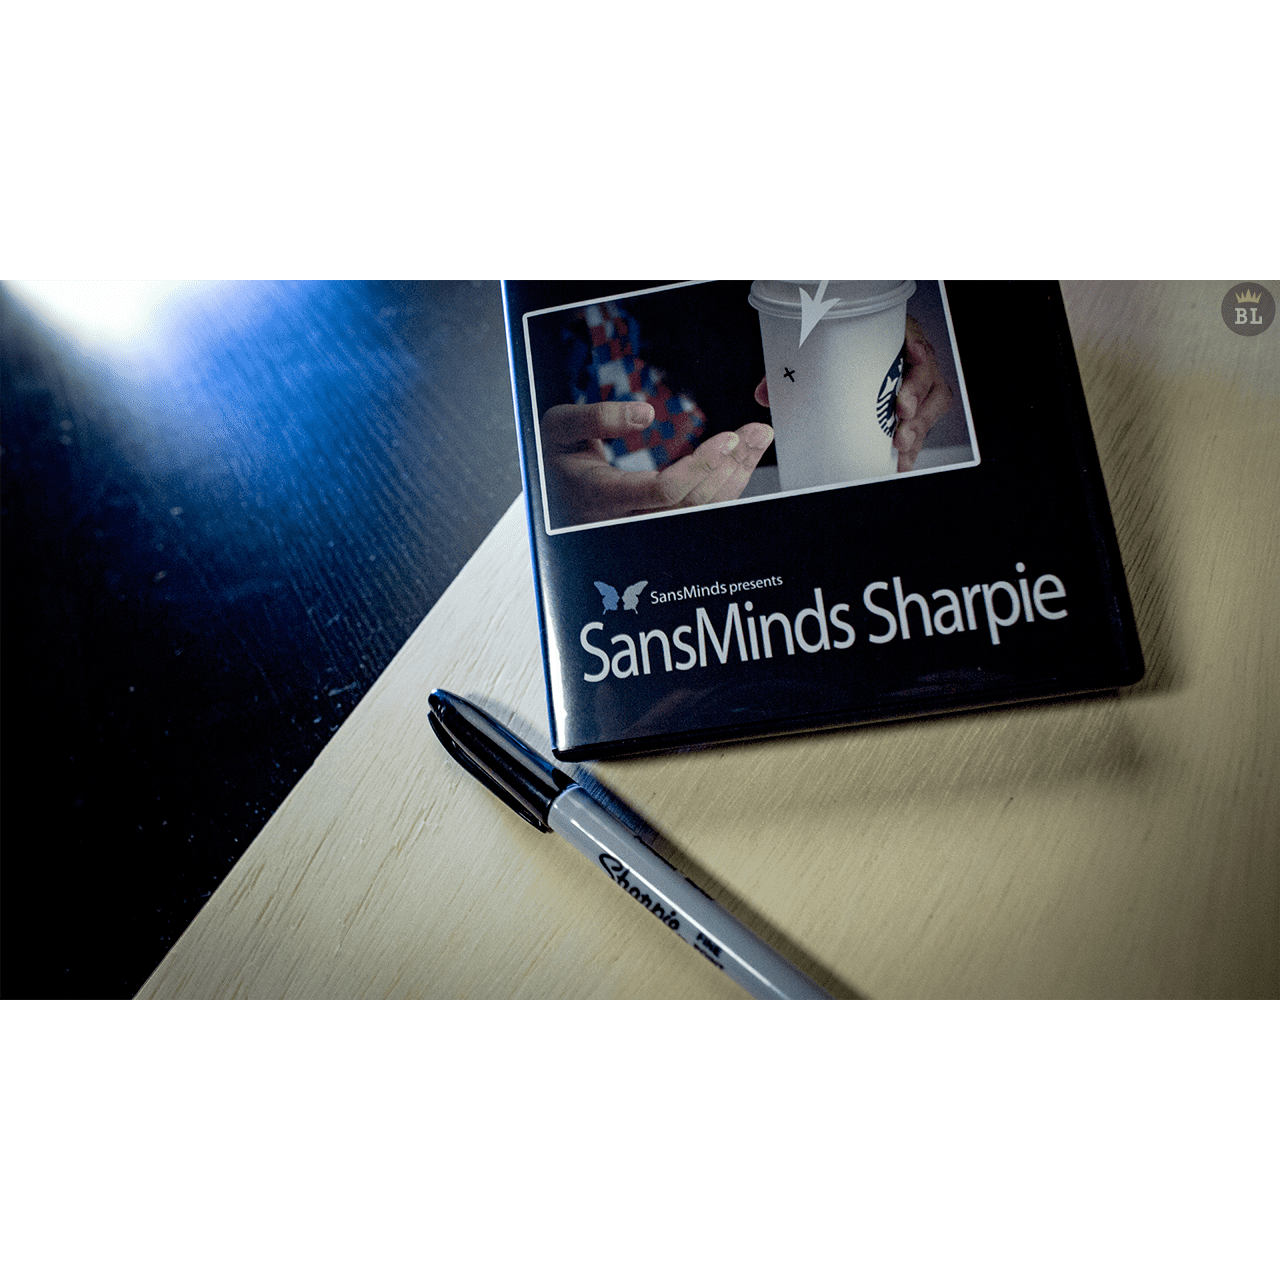 SansMinds Sharpie (DVD and Gimmick) by Will Tsai - DVD